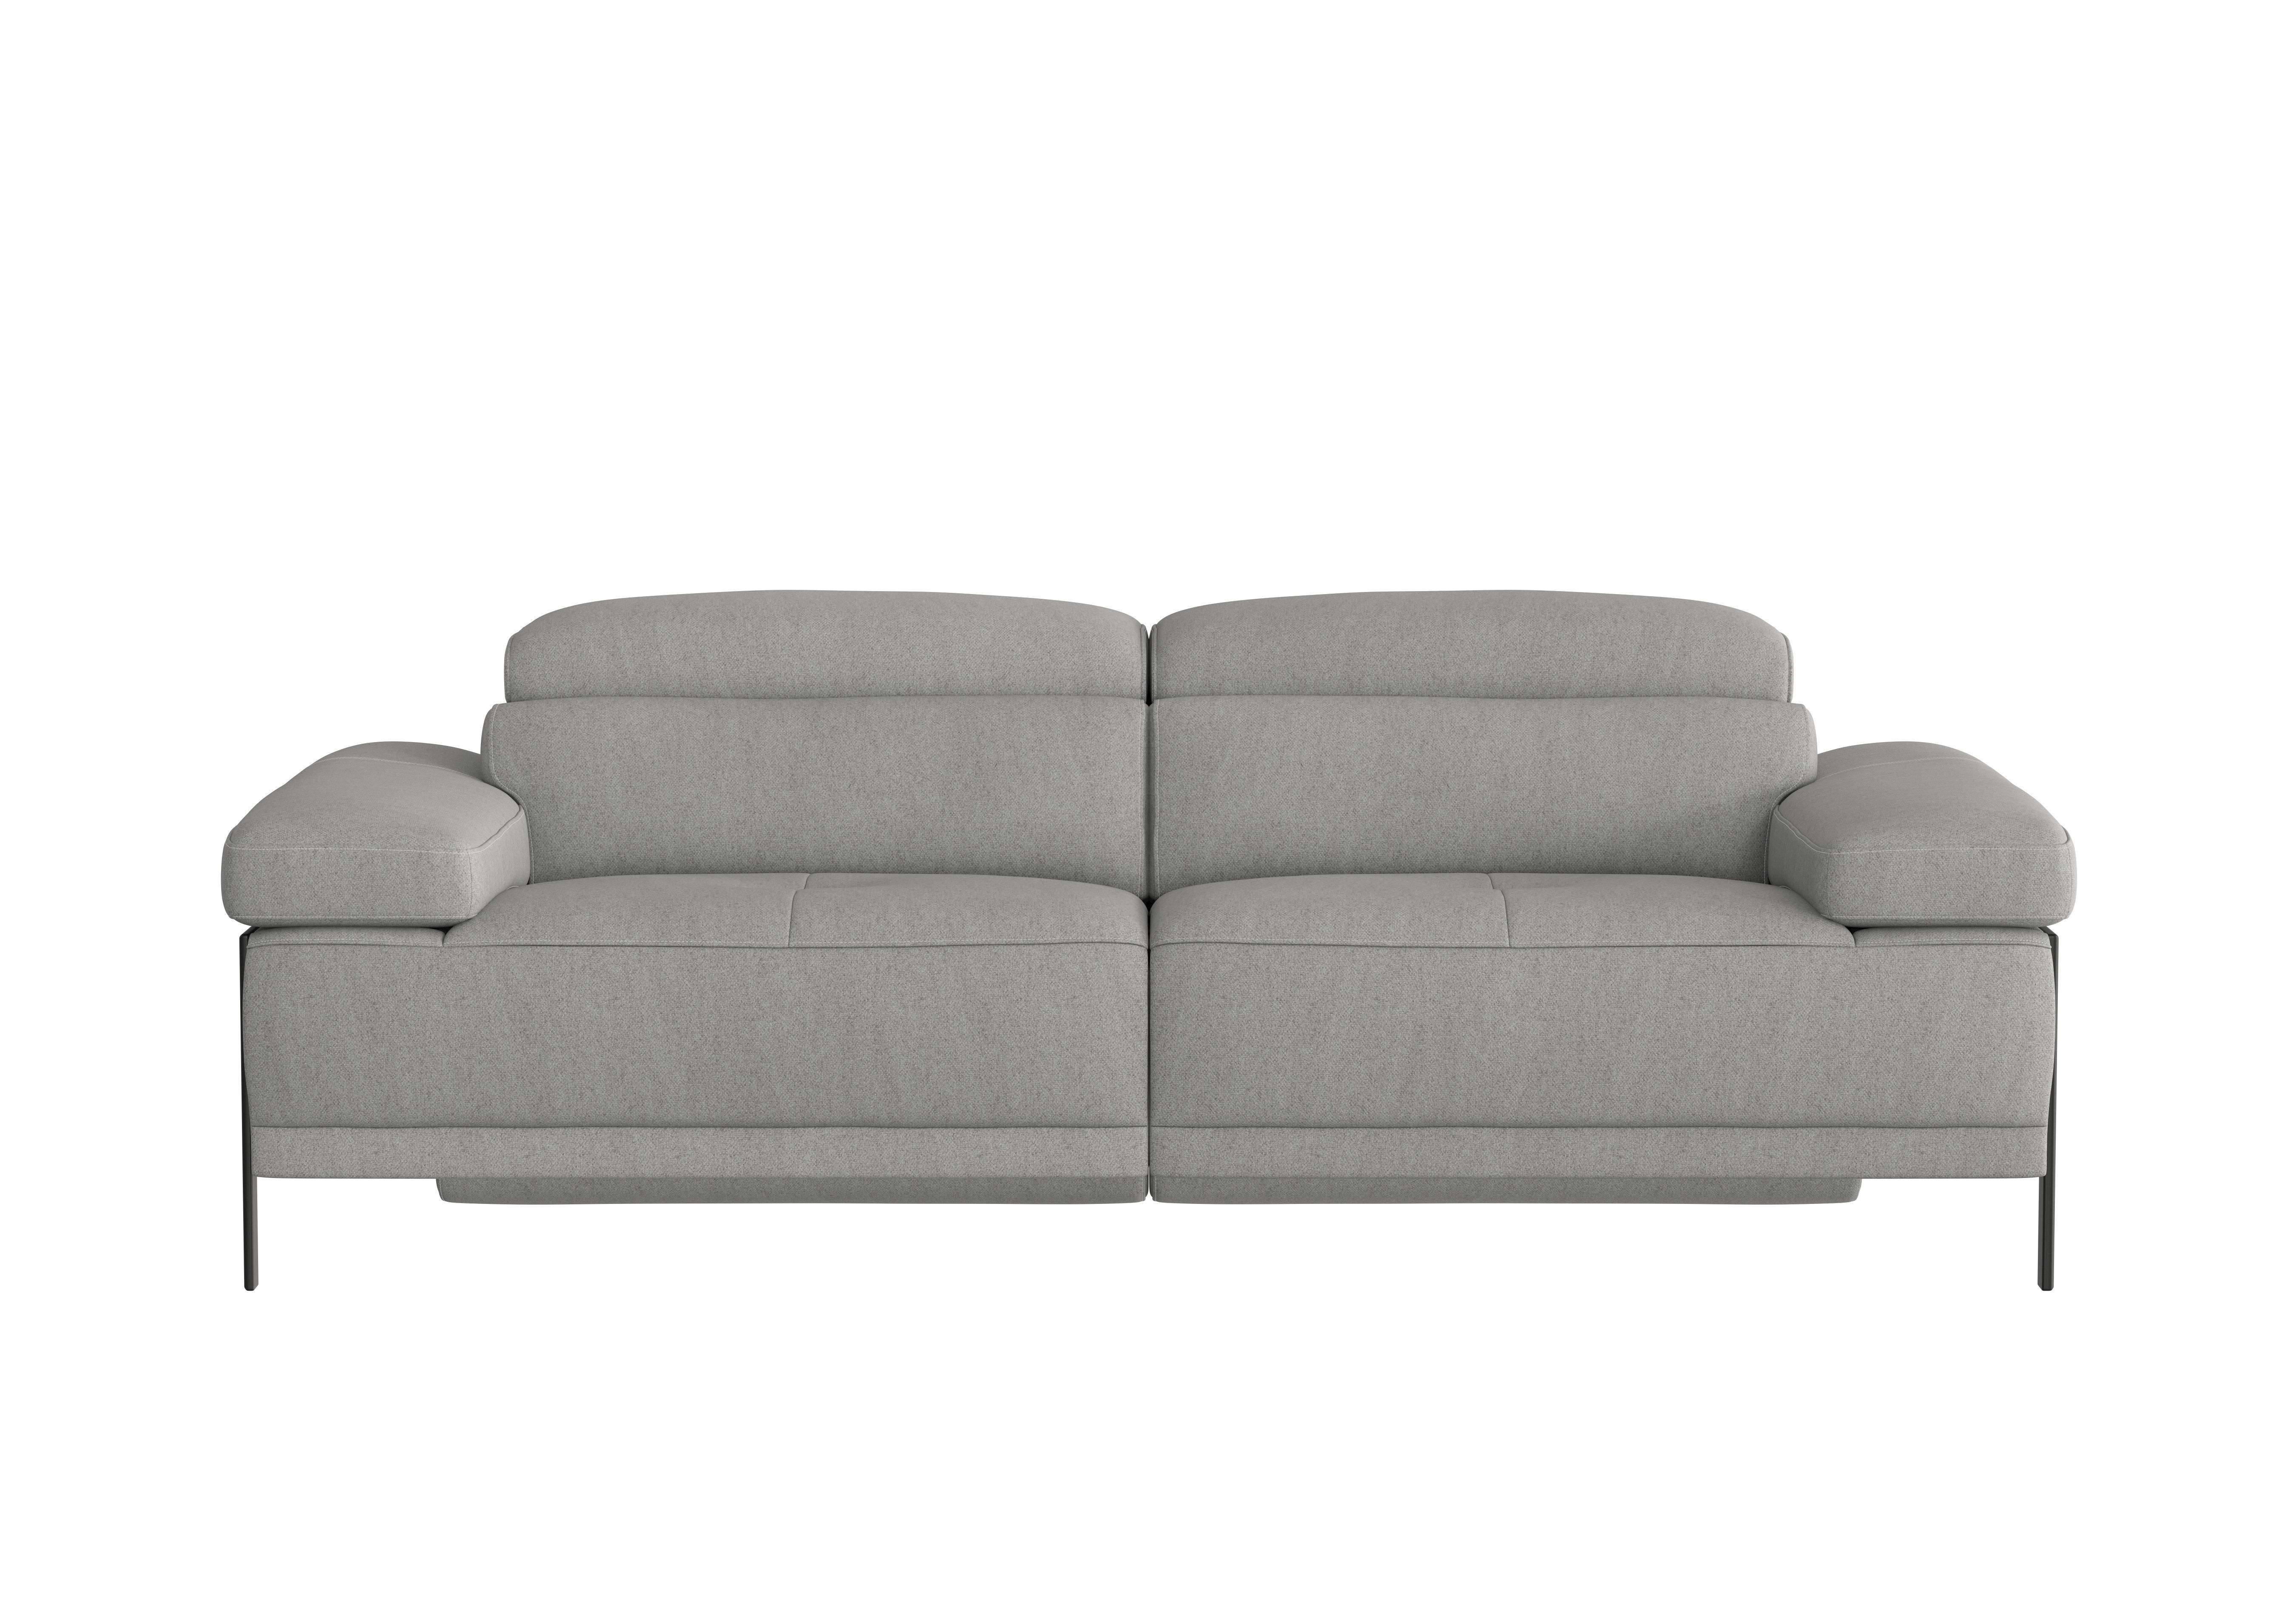 Theron 3 Seater Fabric Sofa in Fuente Ash Ti Ft on Furniture Village